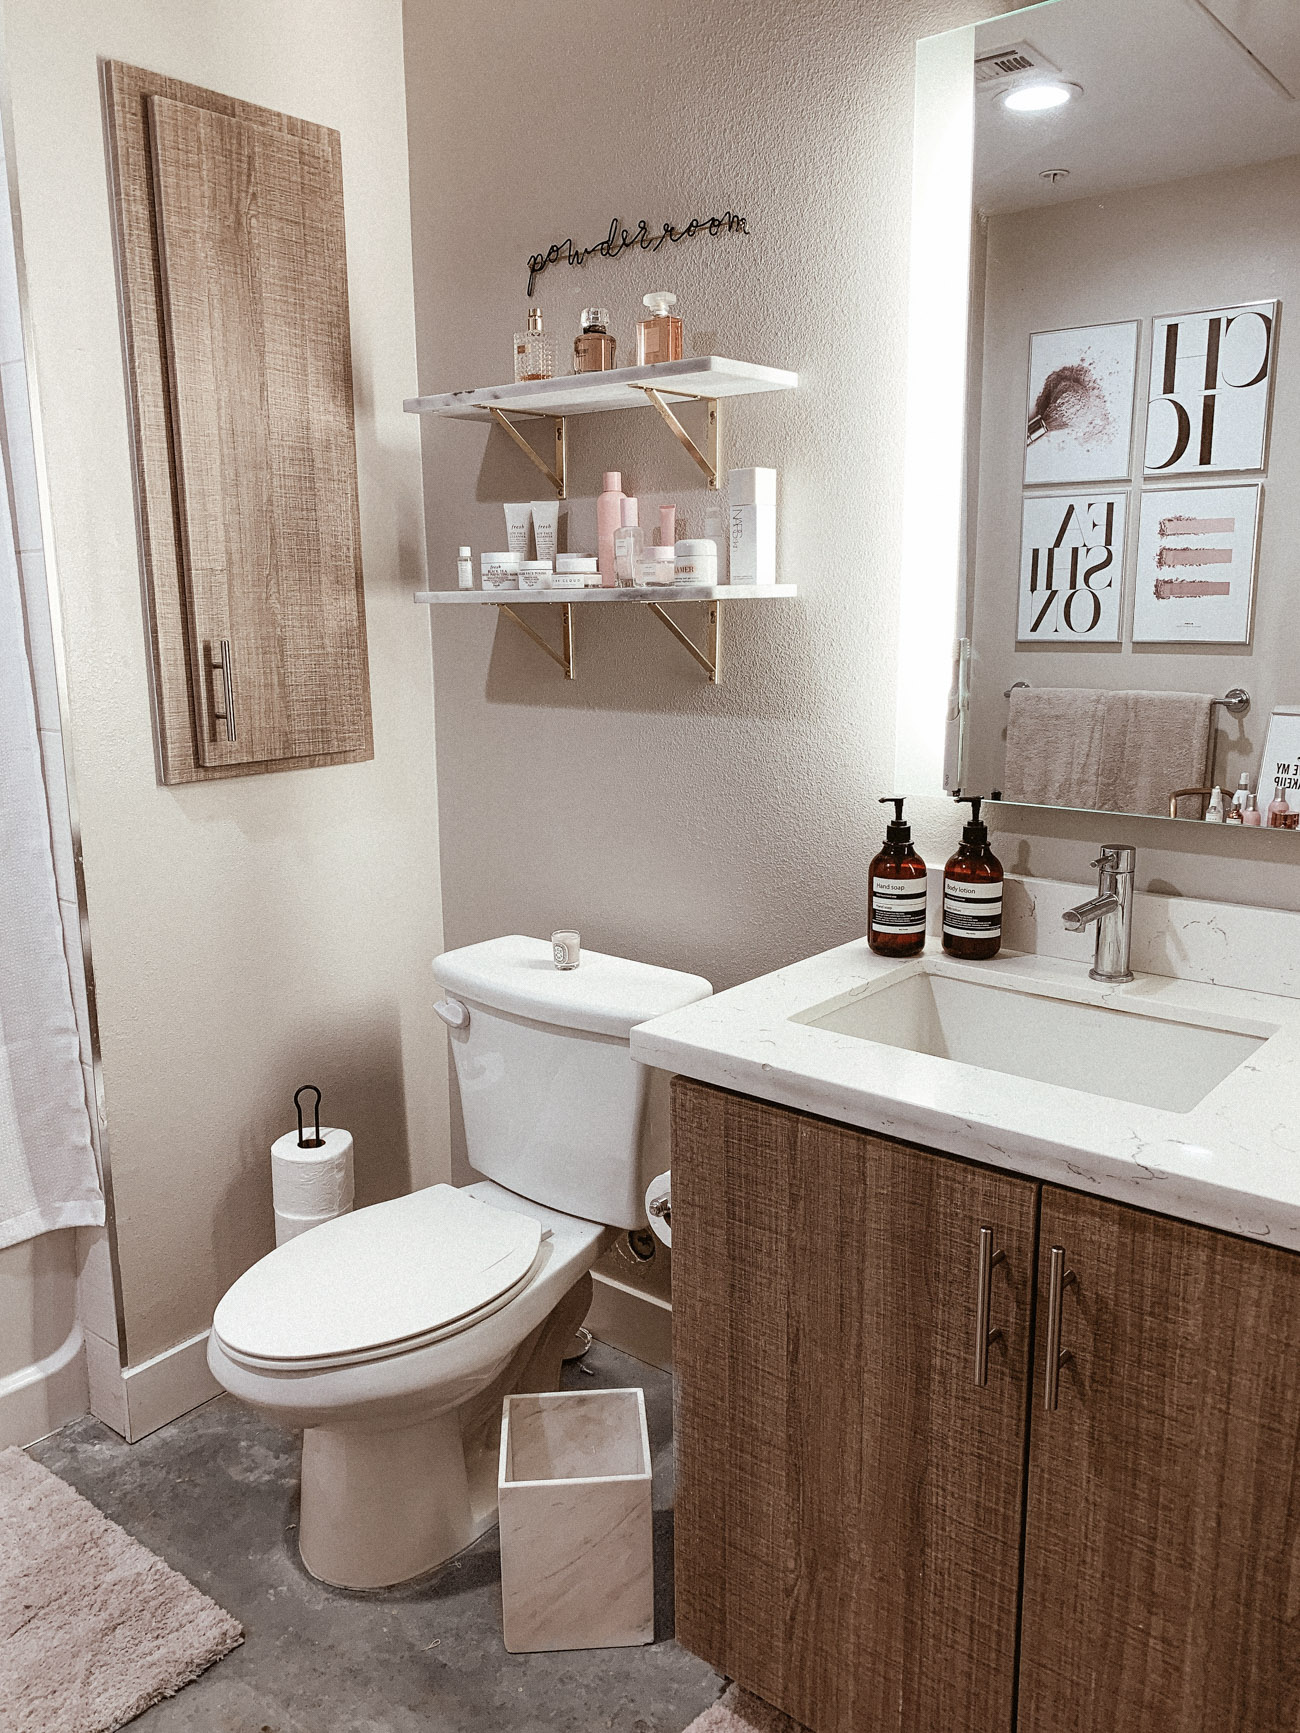 My Apartment Bathroom Decor Blondie, Bathroom Set Ideas For Apartments